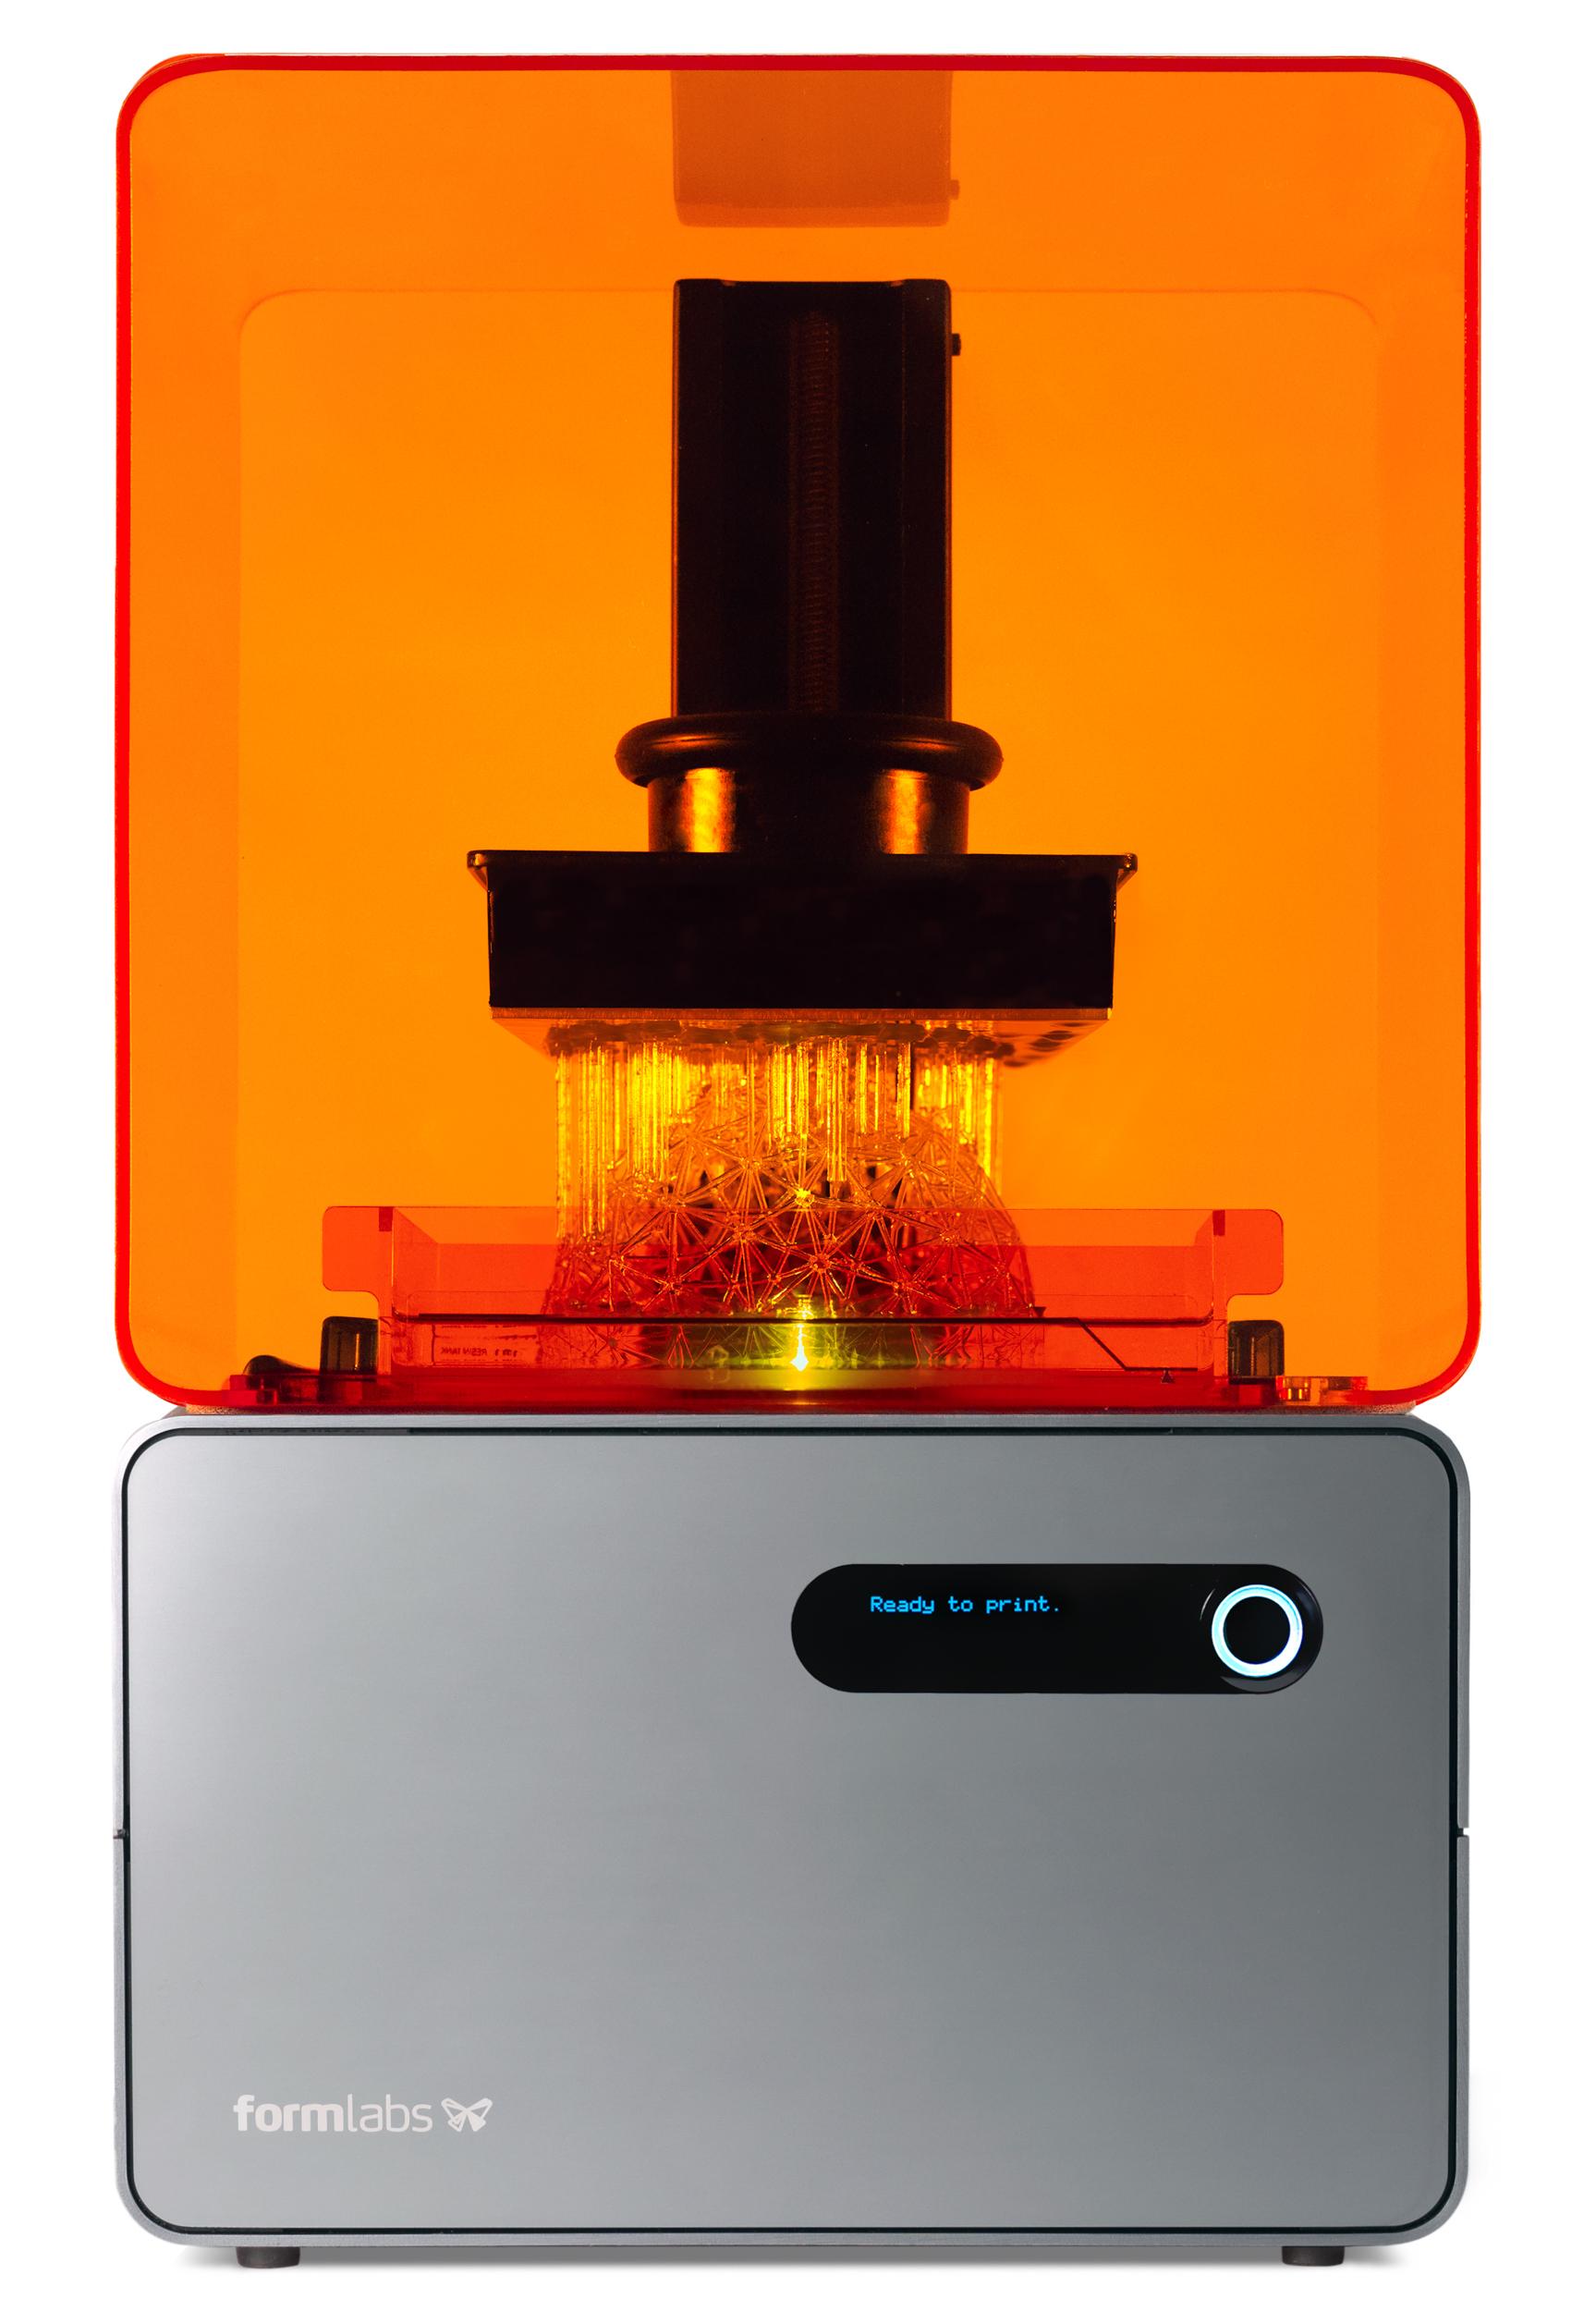 Formlabs Announces Their New Form 1+ SLA 3D Printer, Upgrade Option